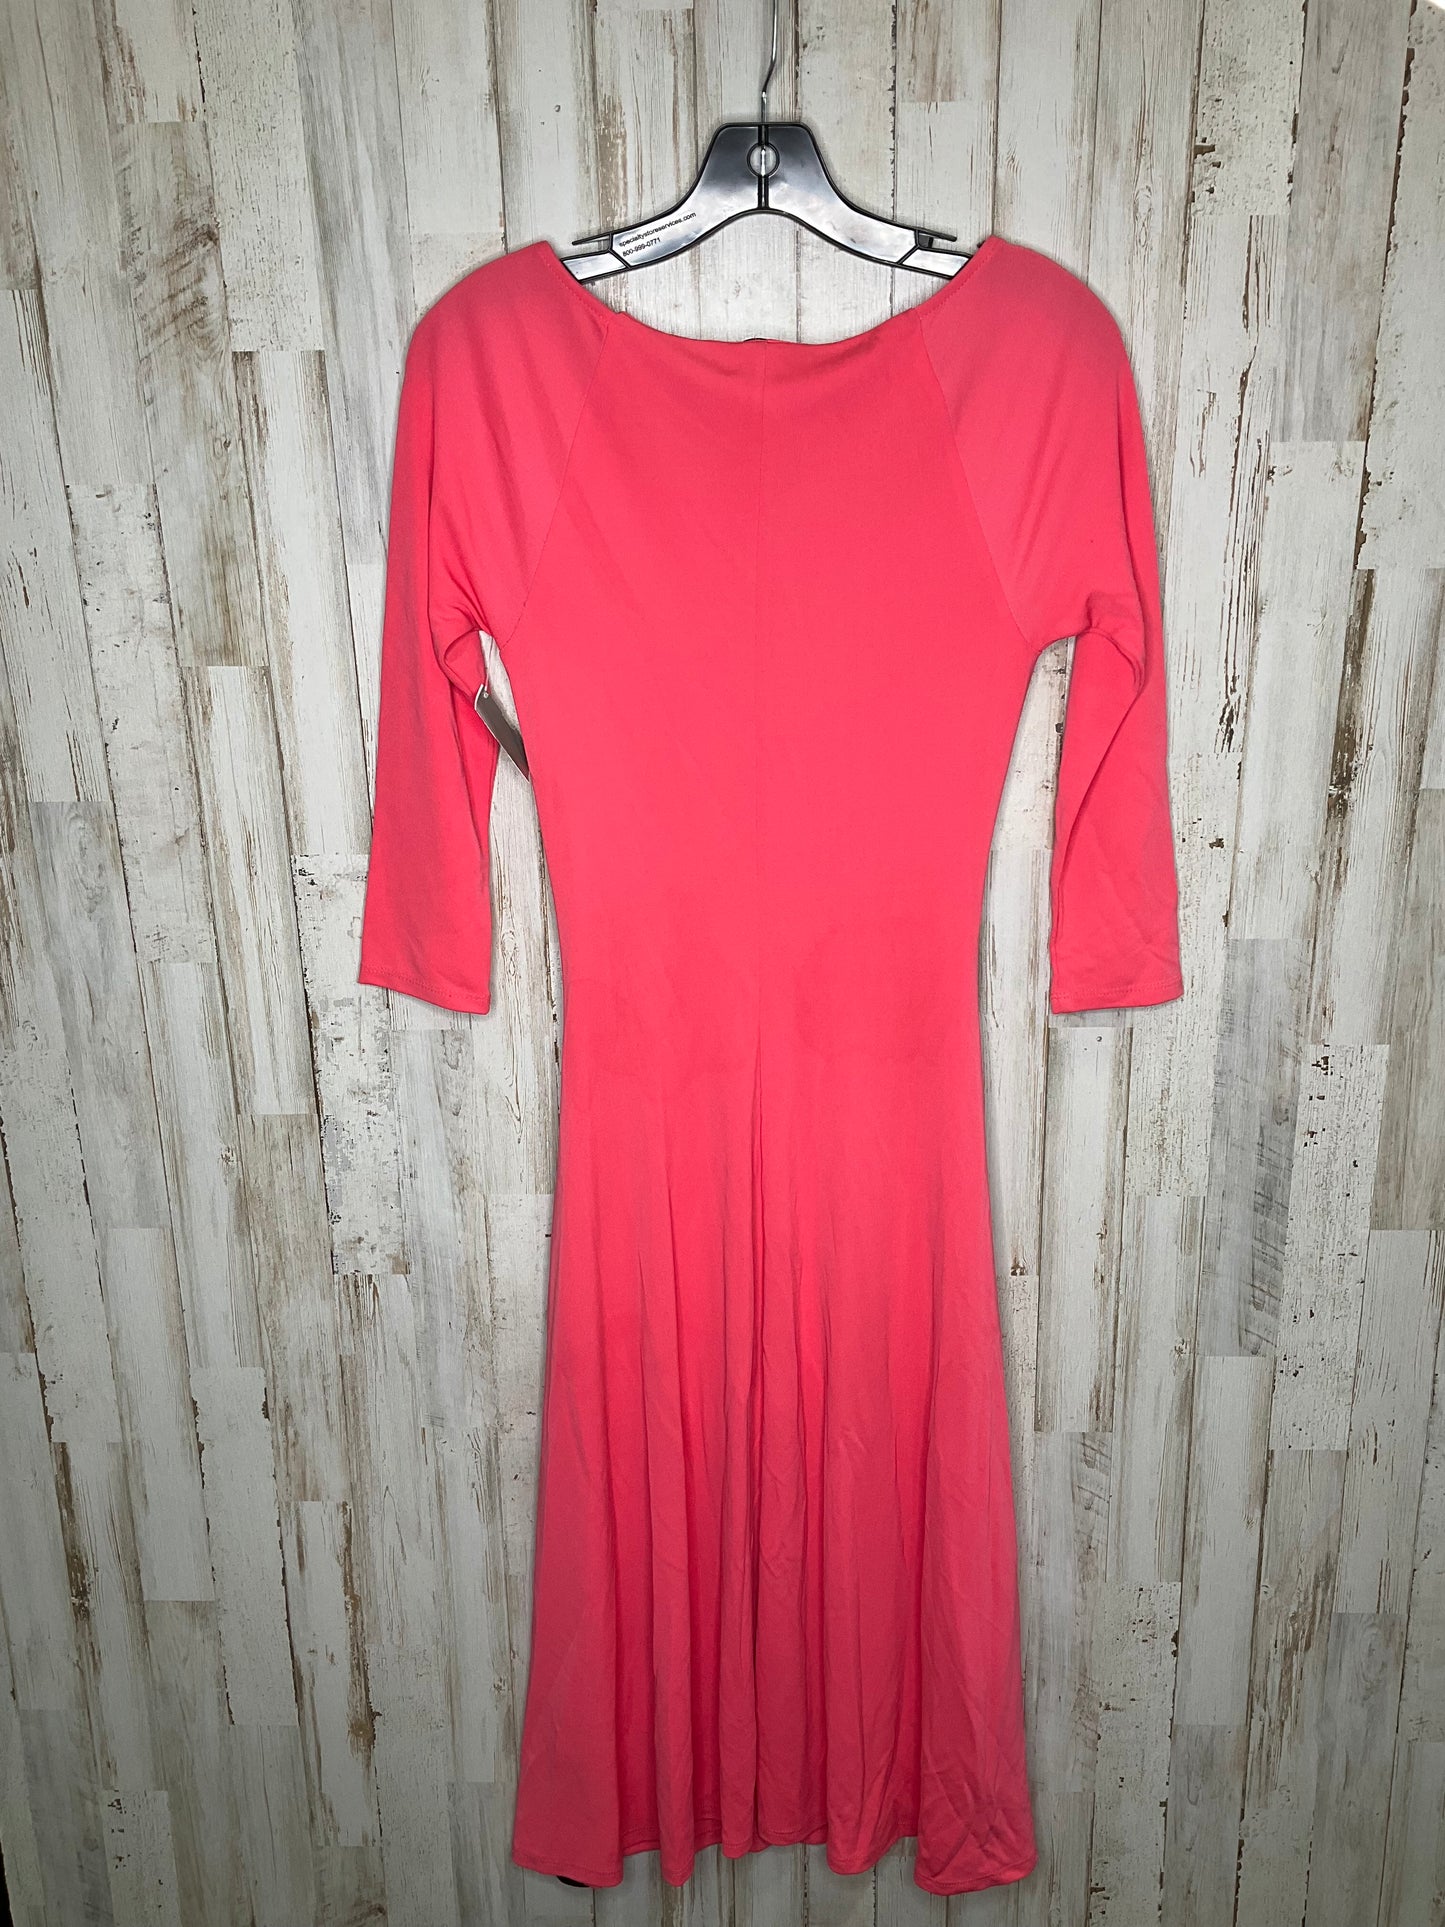 Dress Casual Midi By Lauren By Ralph Lauren  Size: Xs